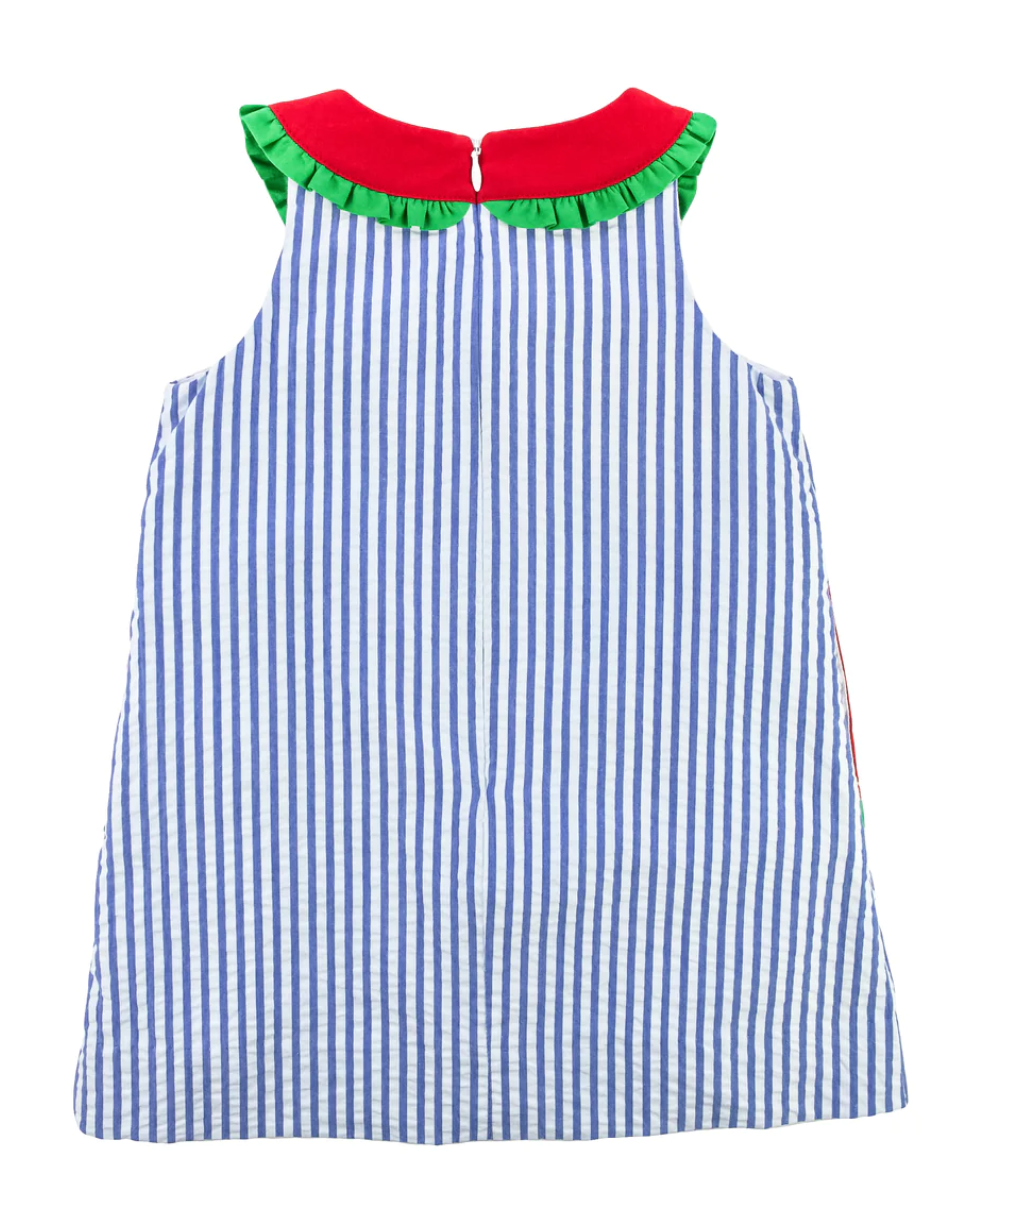 Seersucker Dress With Watermelon Pockets